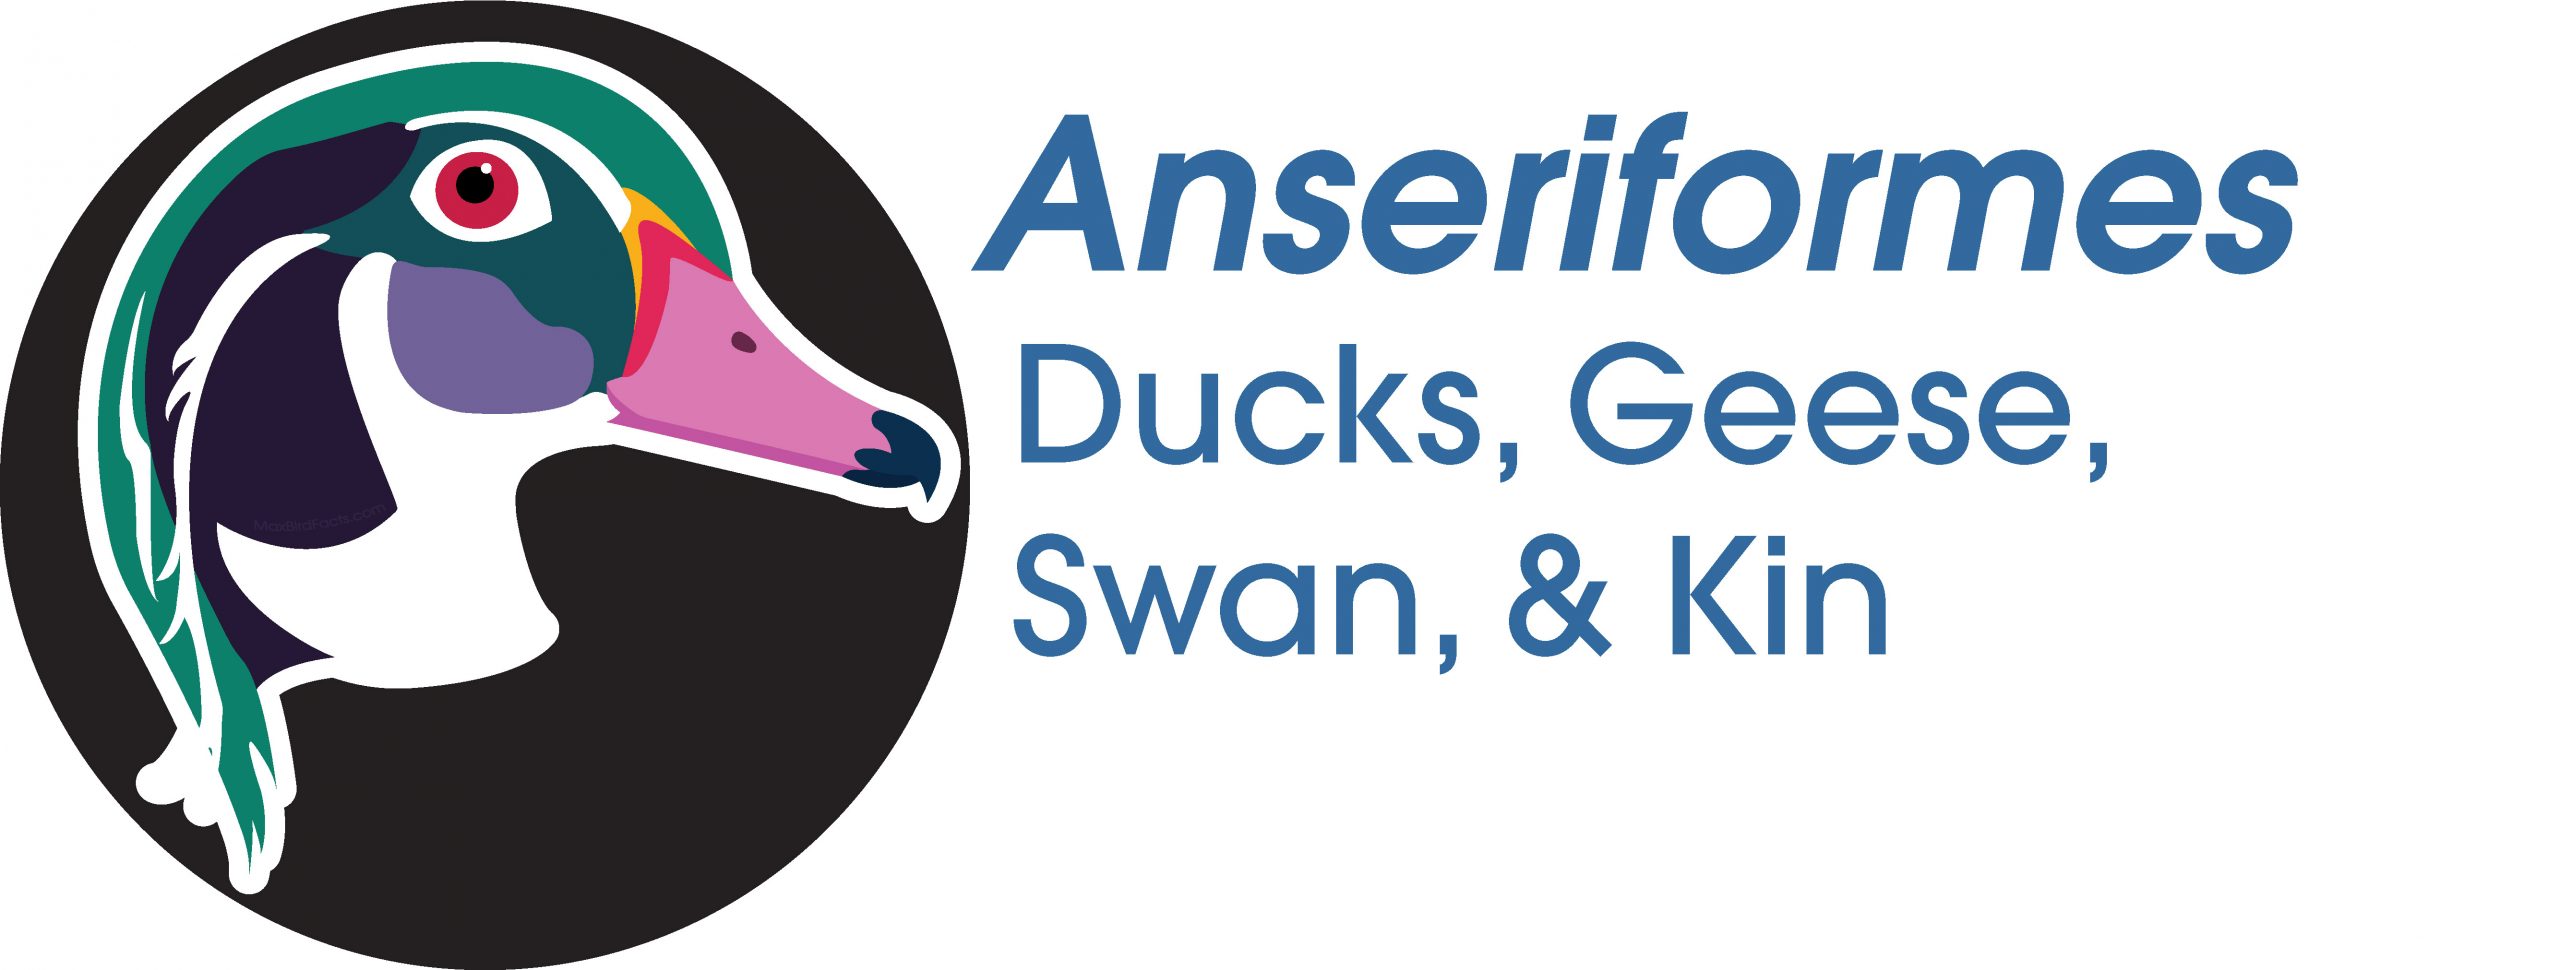 Anseriformes
Ducks, Geese, Swan, and Kin
Wood Duck